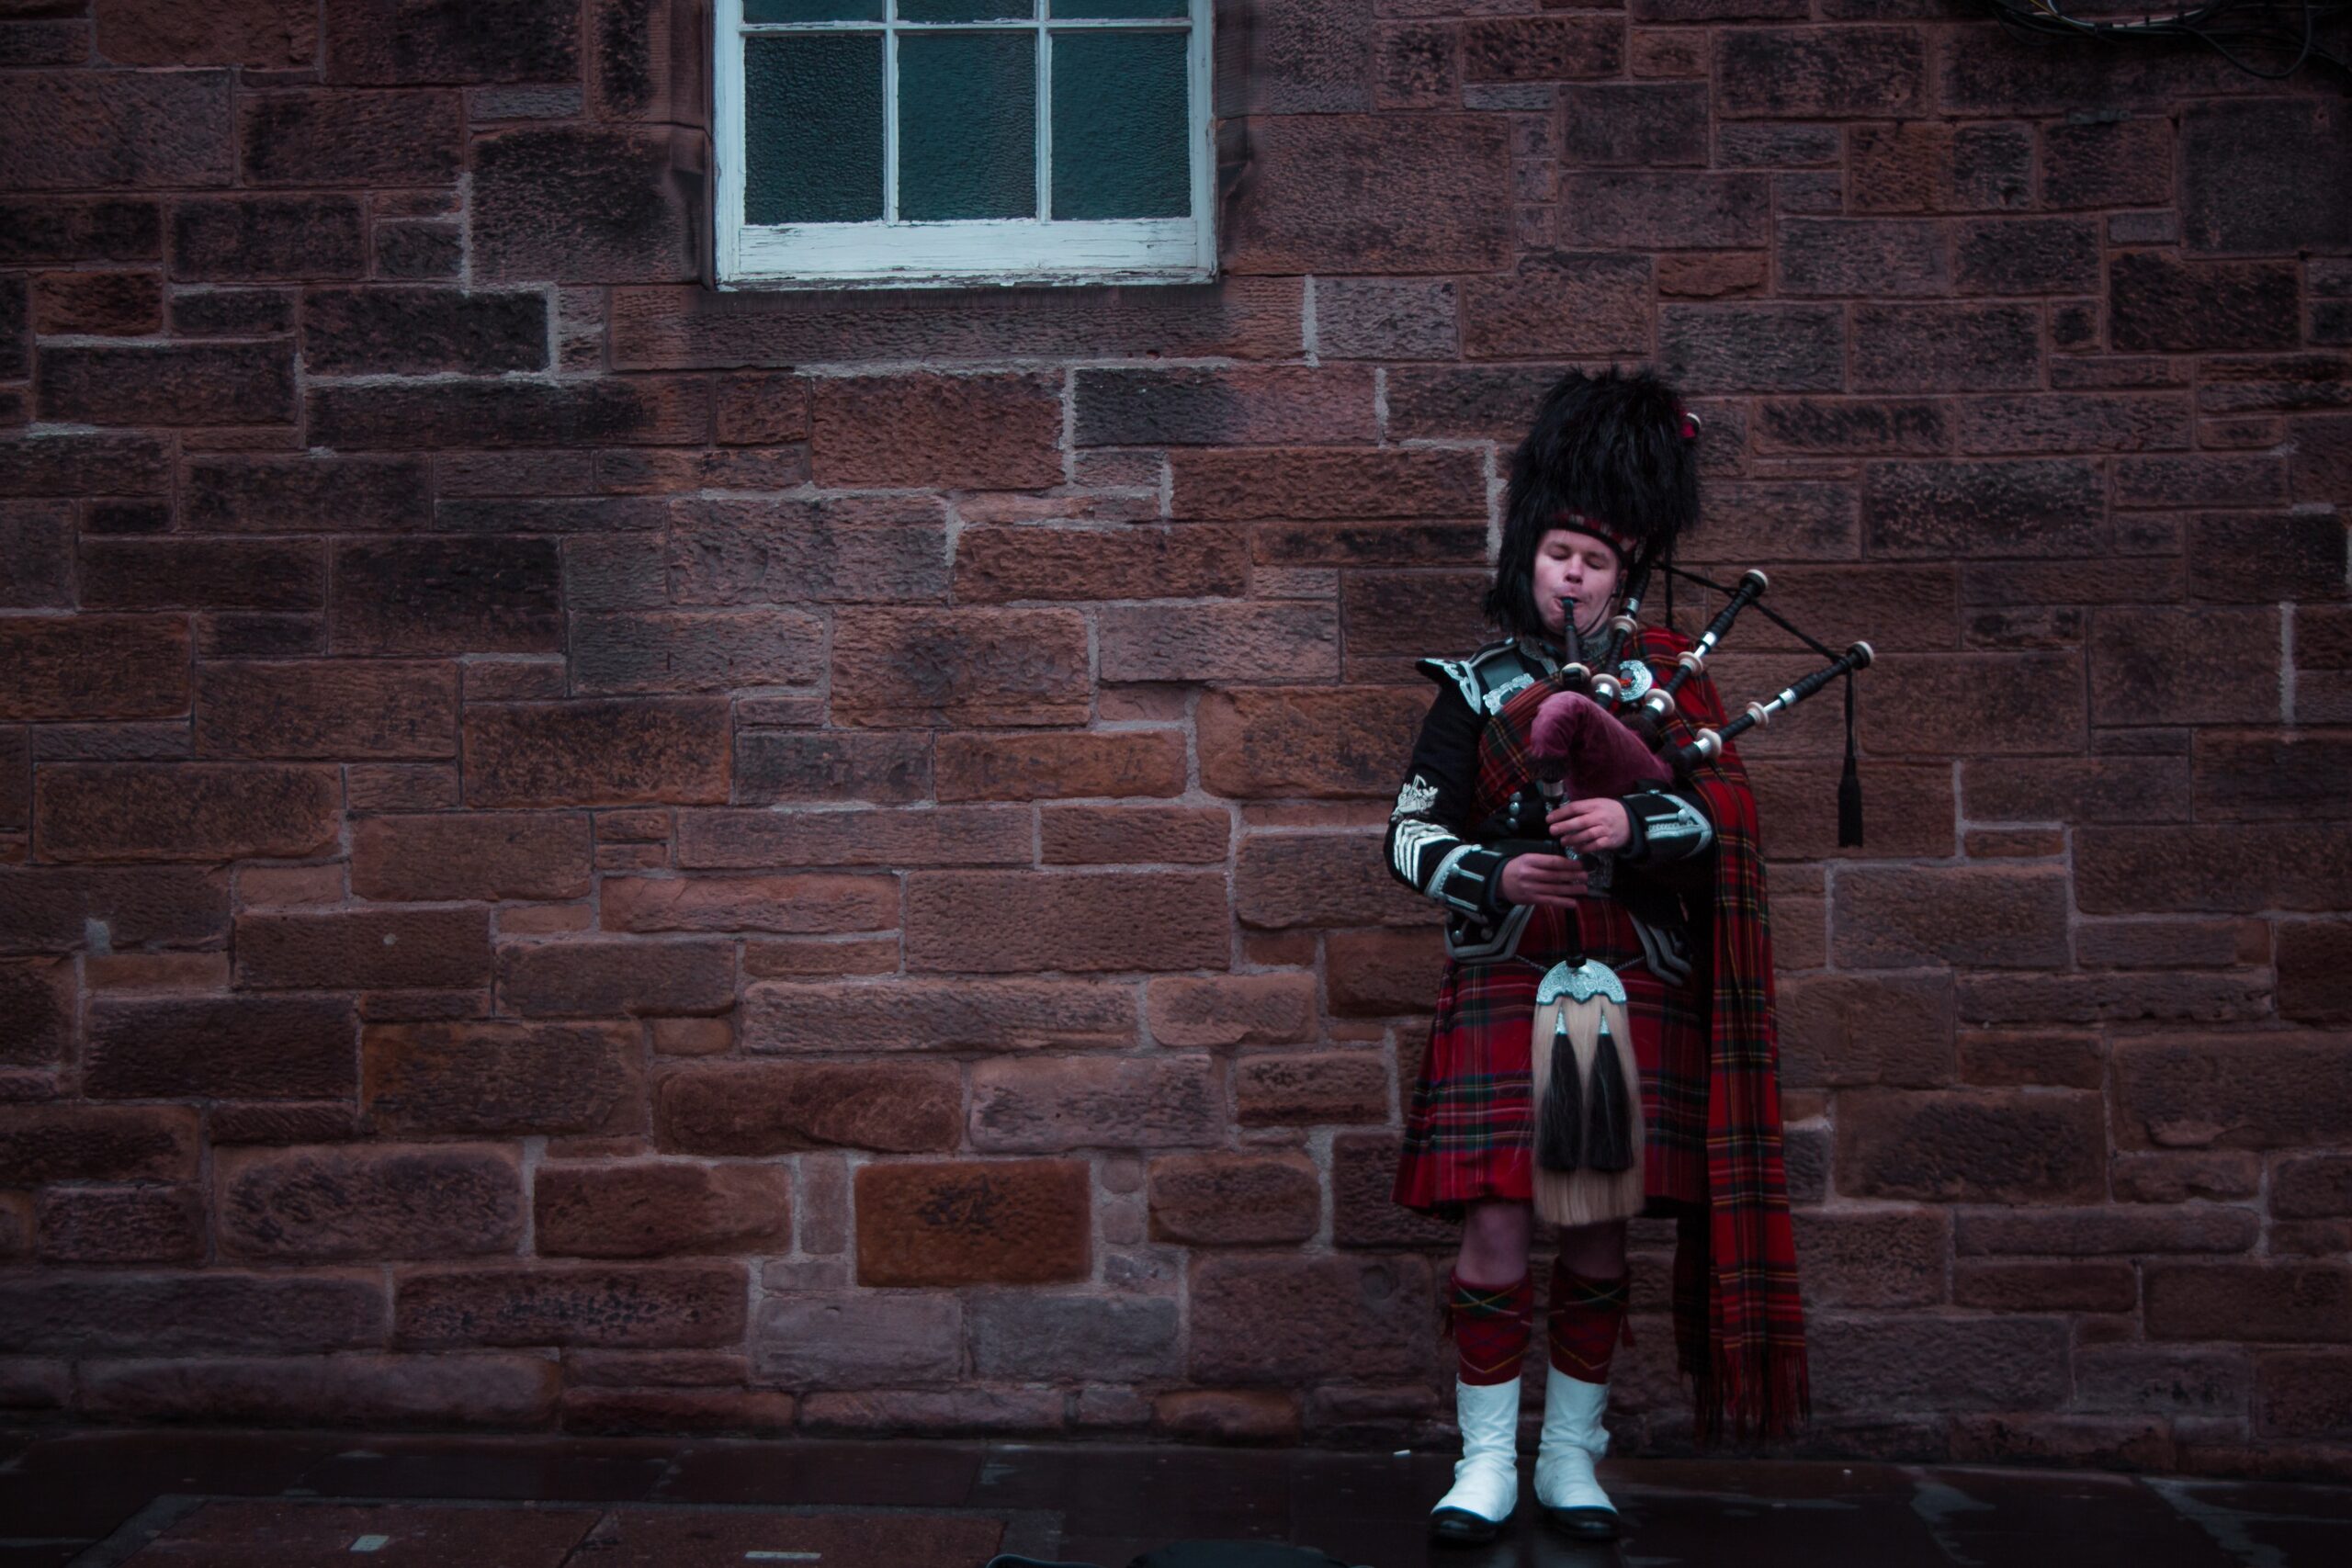 A man playing bagpipes in Edinburgh